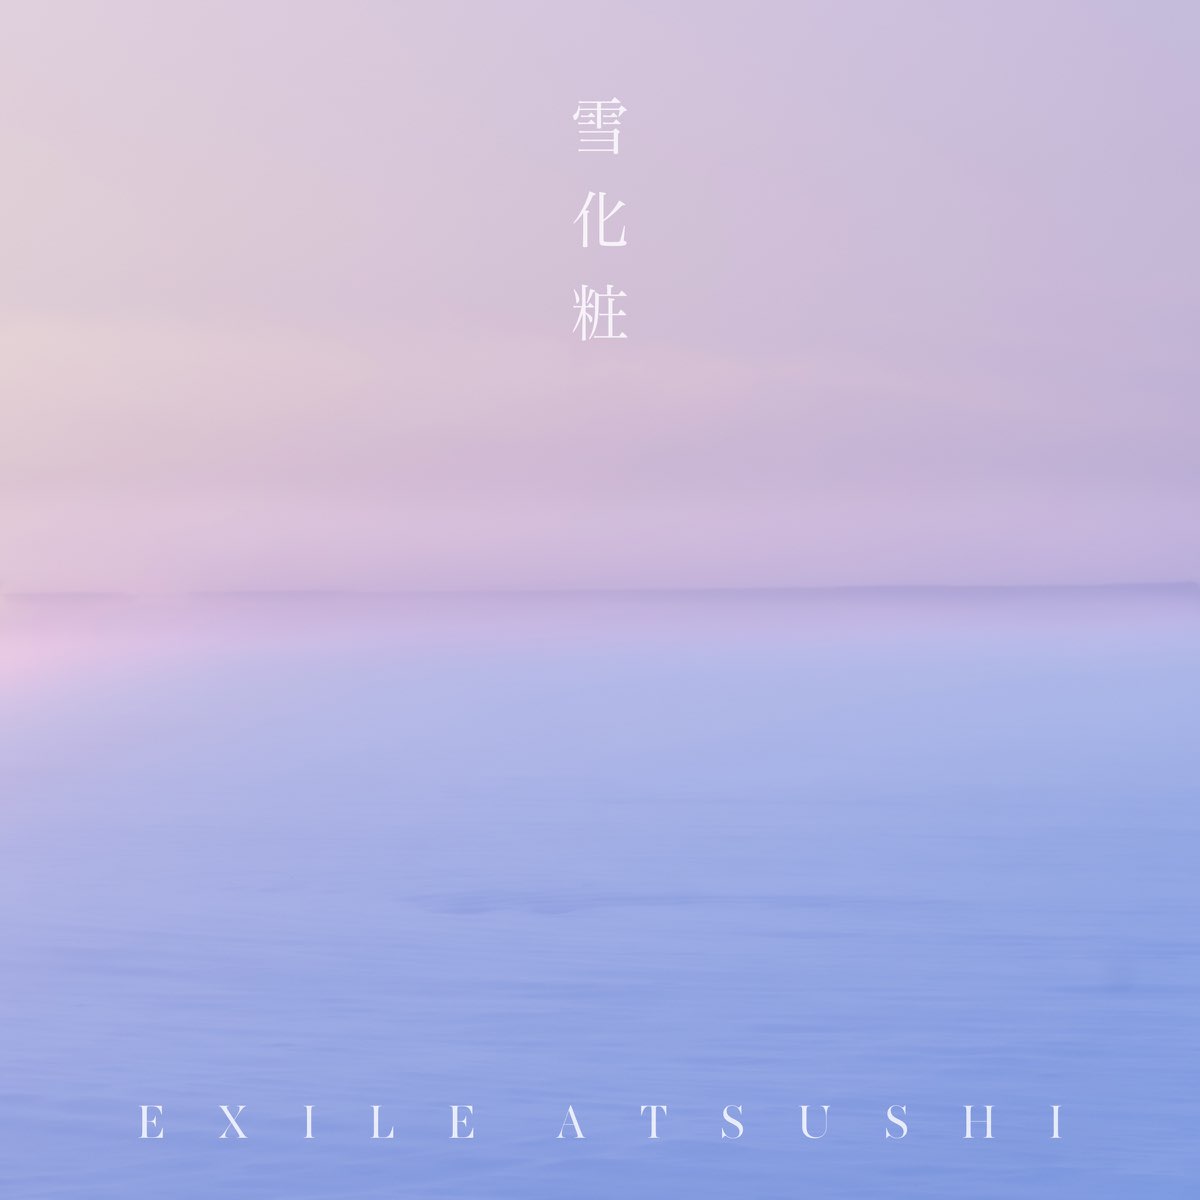 Exile Atsushiの 雪化粧 Single をapple Musicで